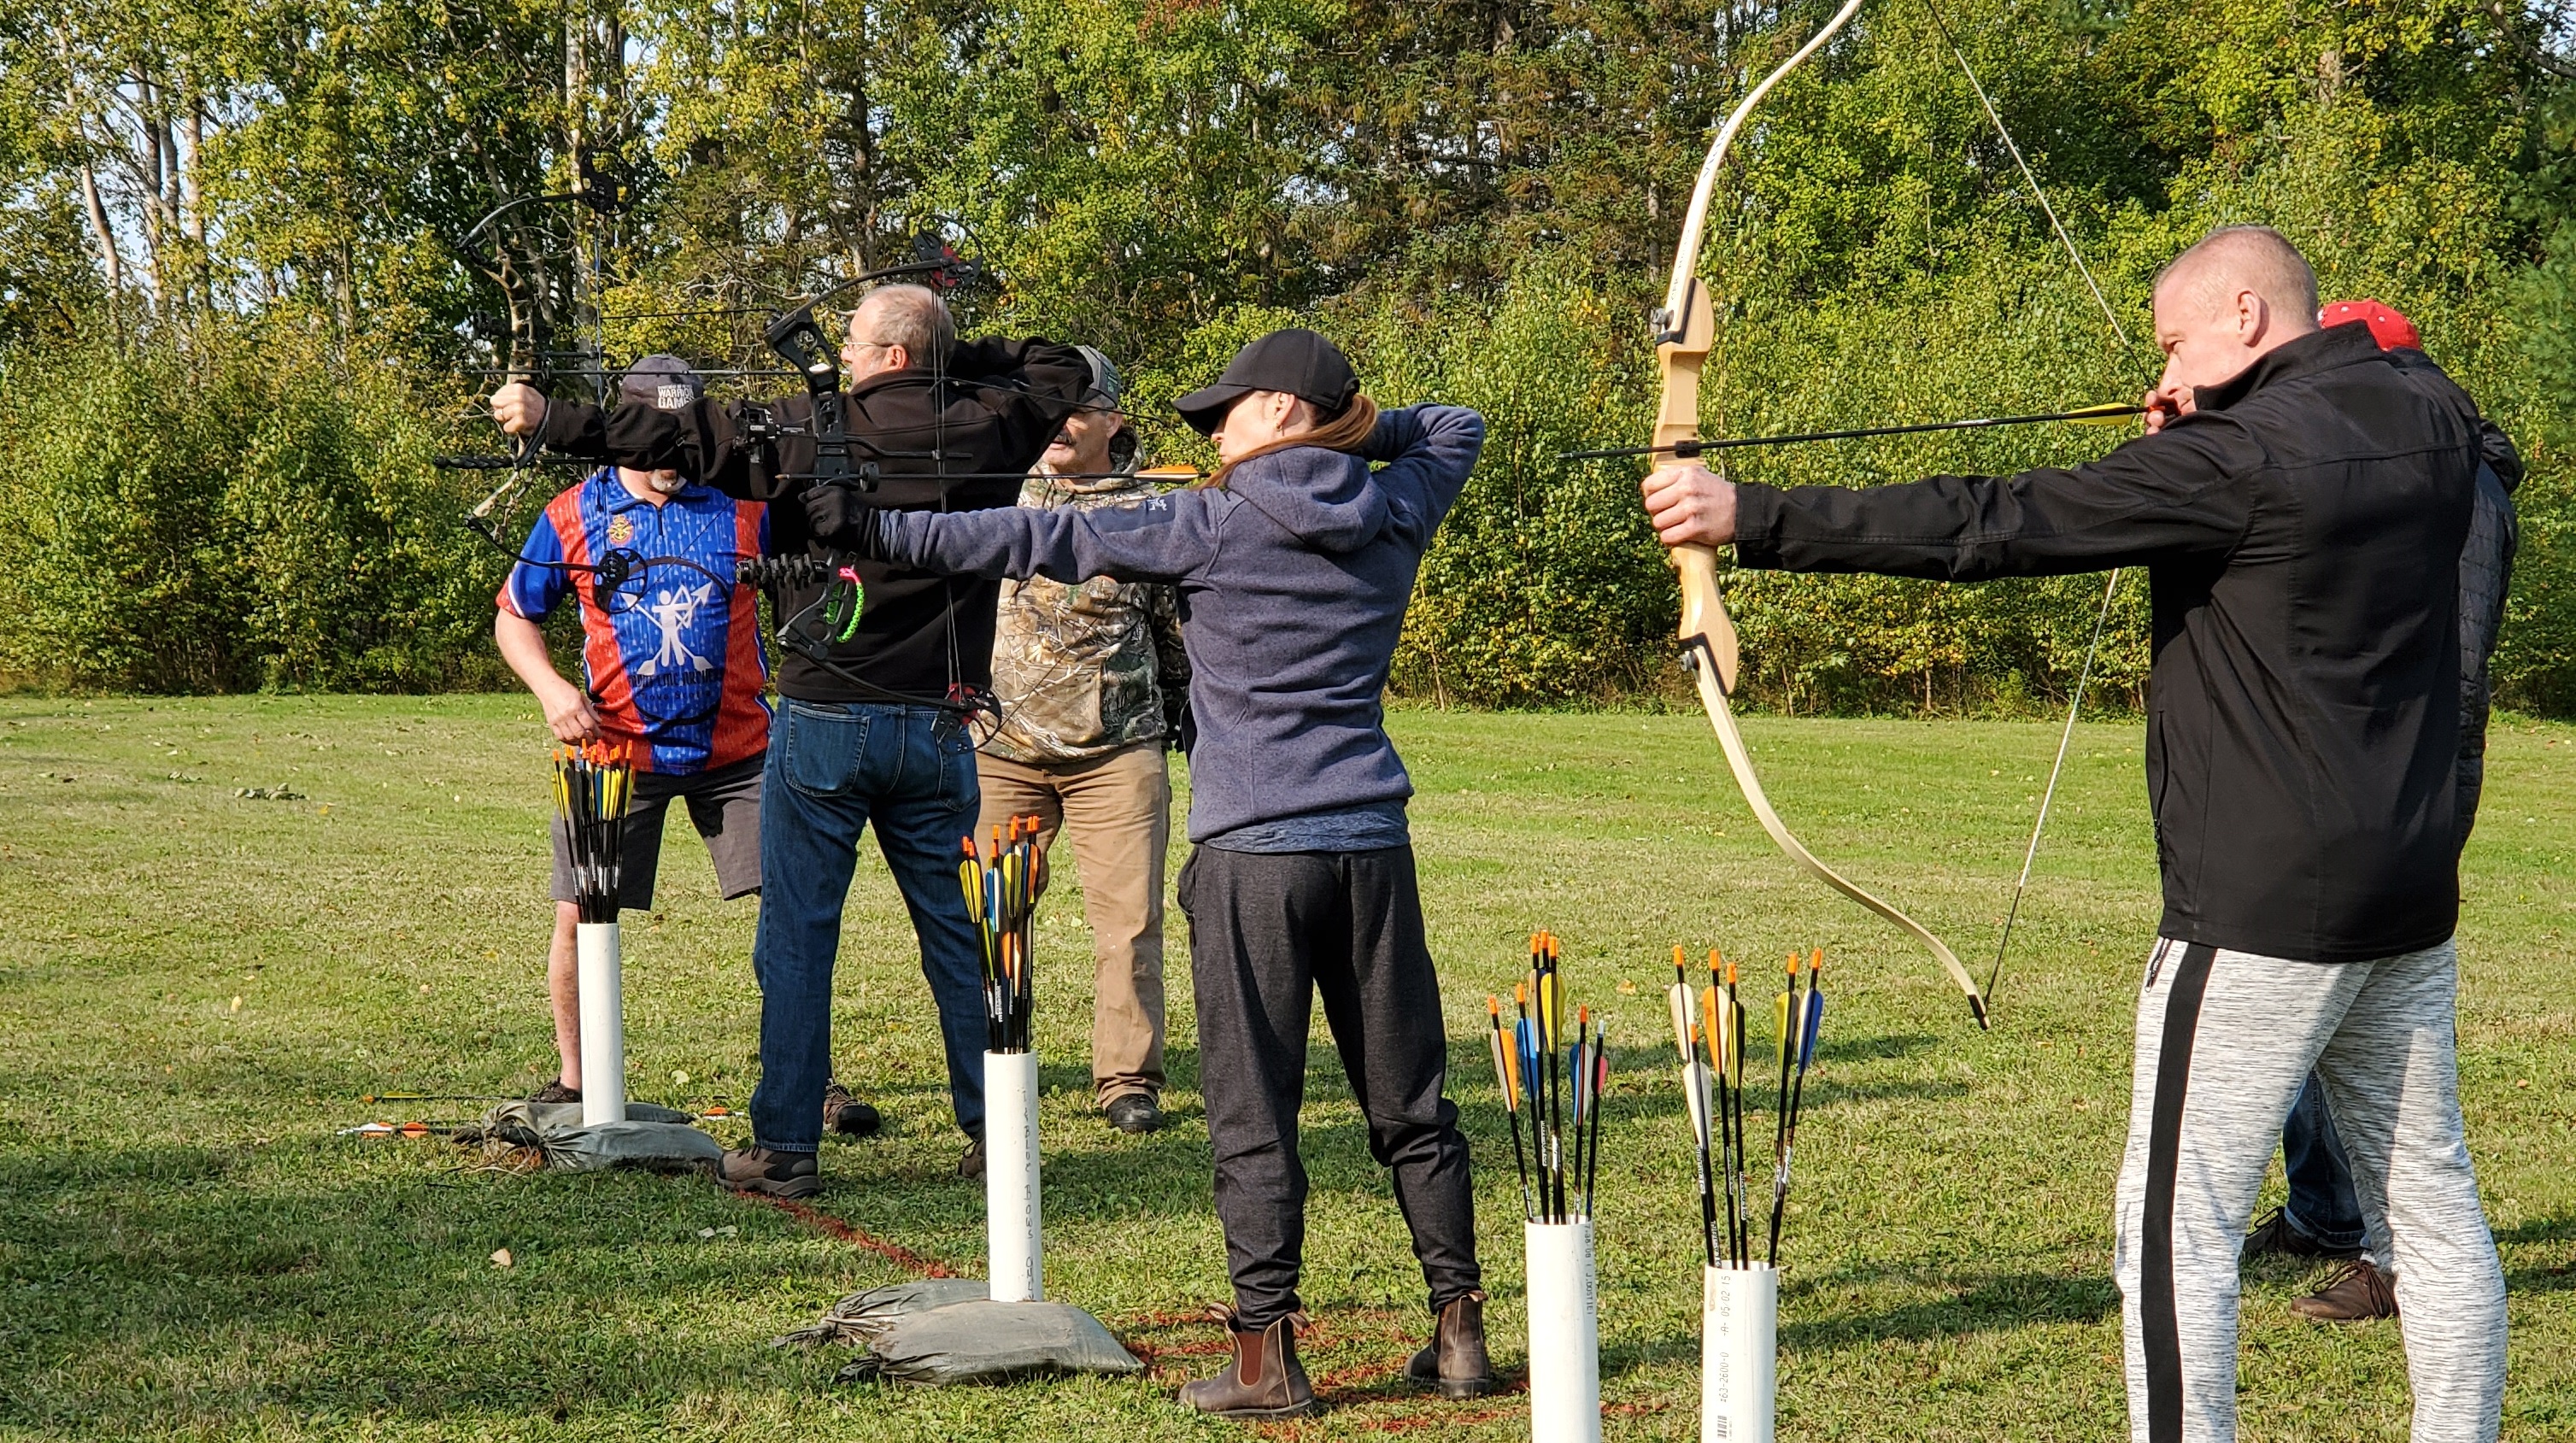 Sgt. Steve Murgatroyd Hosts Archery Event on His Farm Image